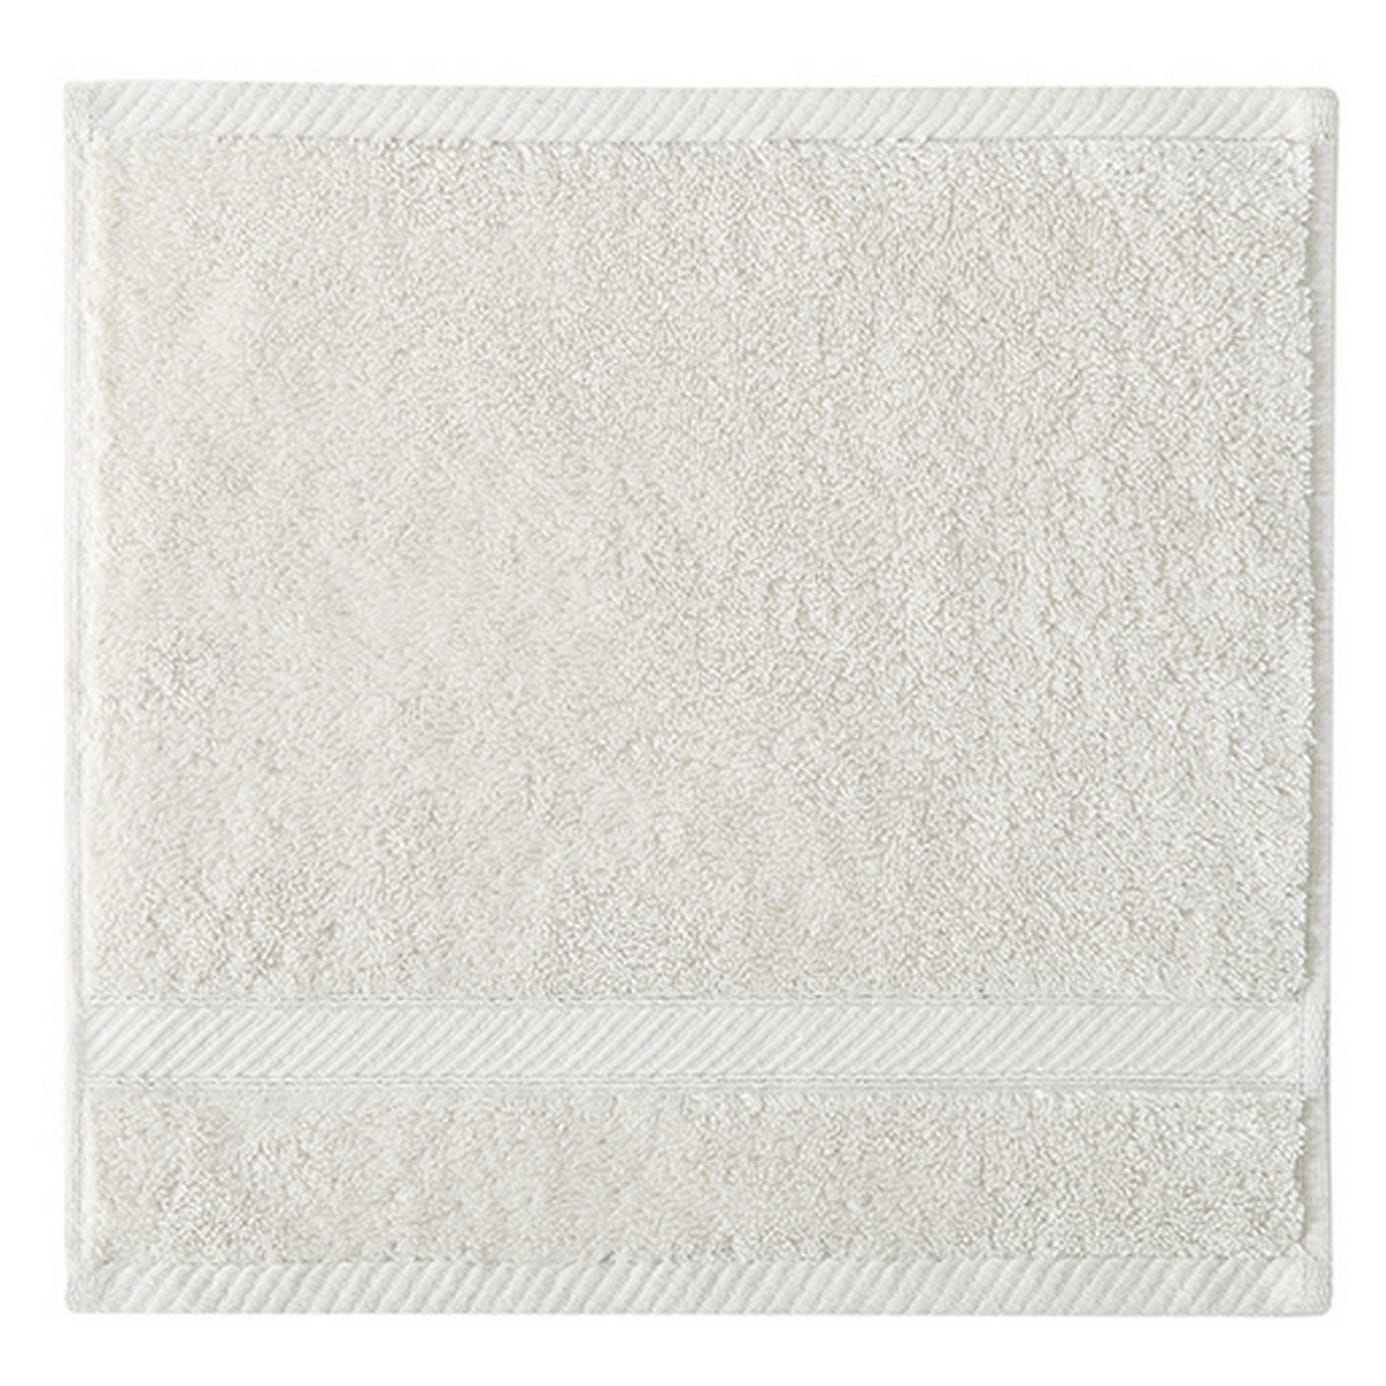 Charisma 4pk Luxury Towels Set: 2 Hand Towels & 2 Wash Cloths (White)